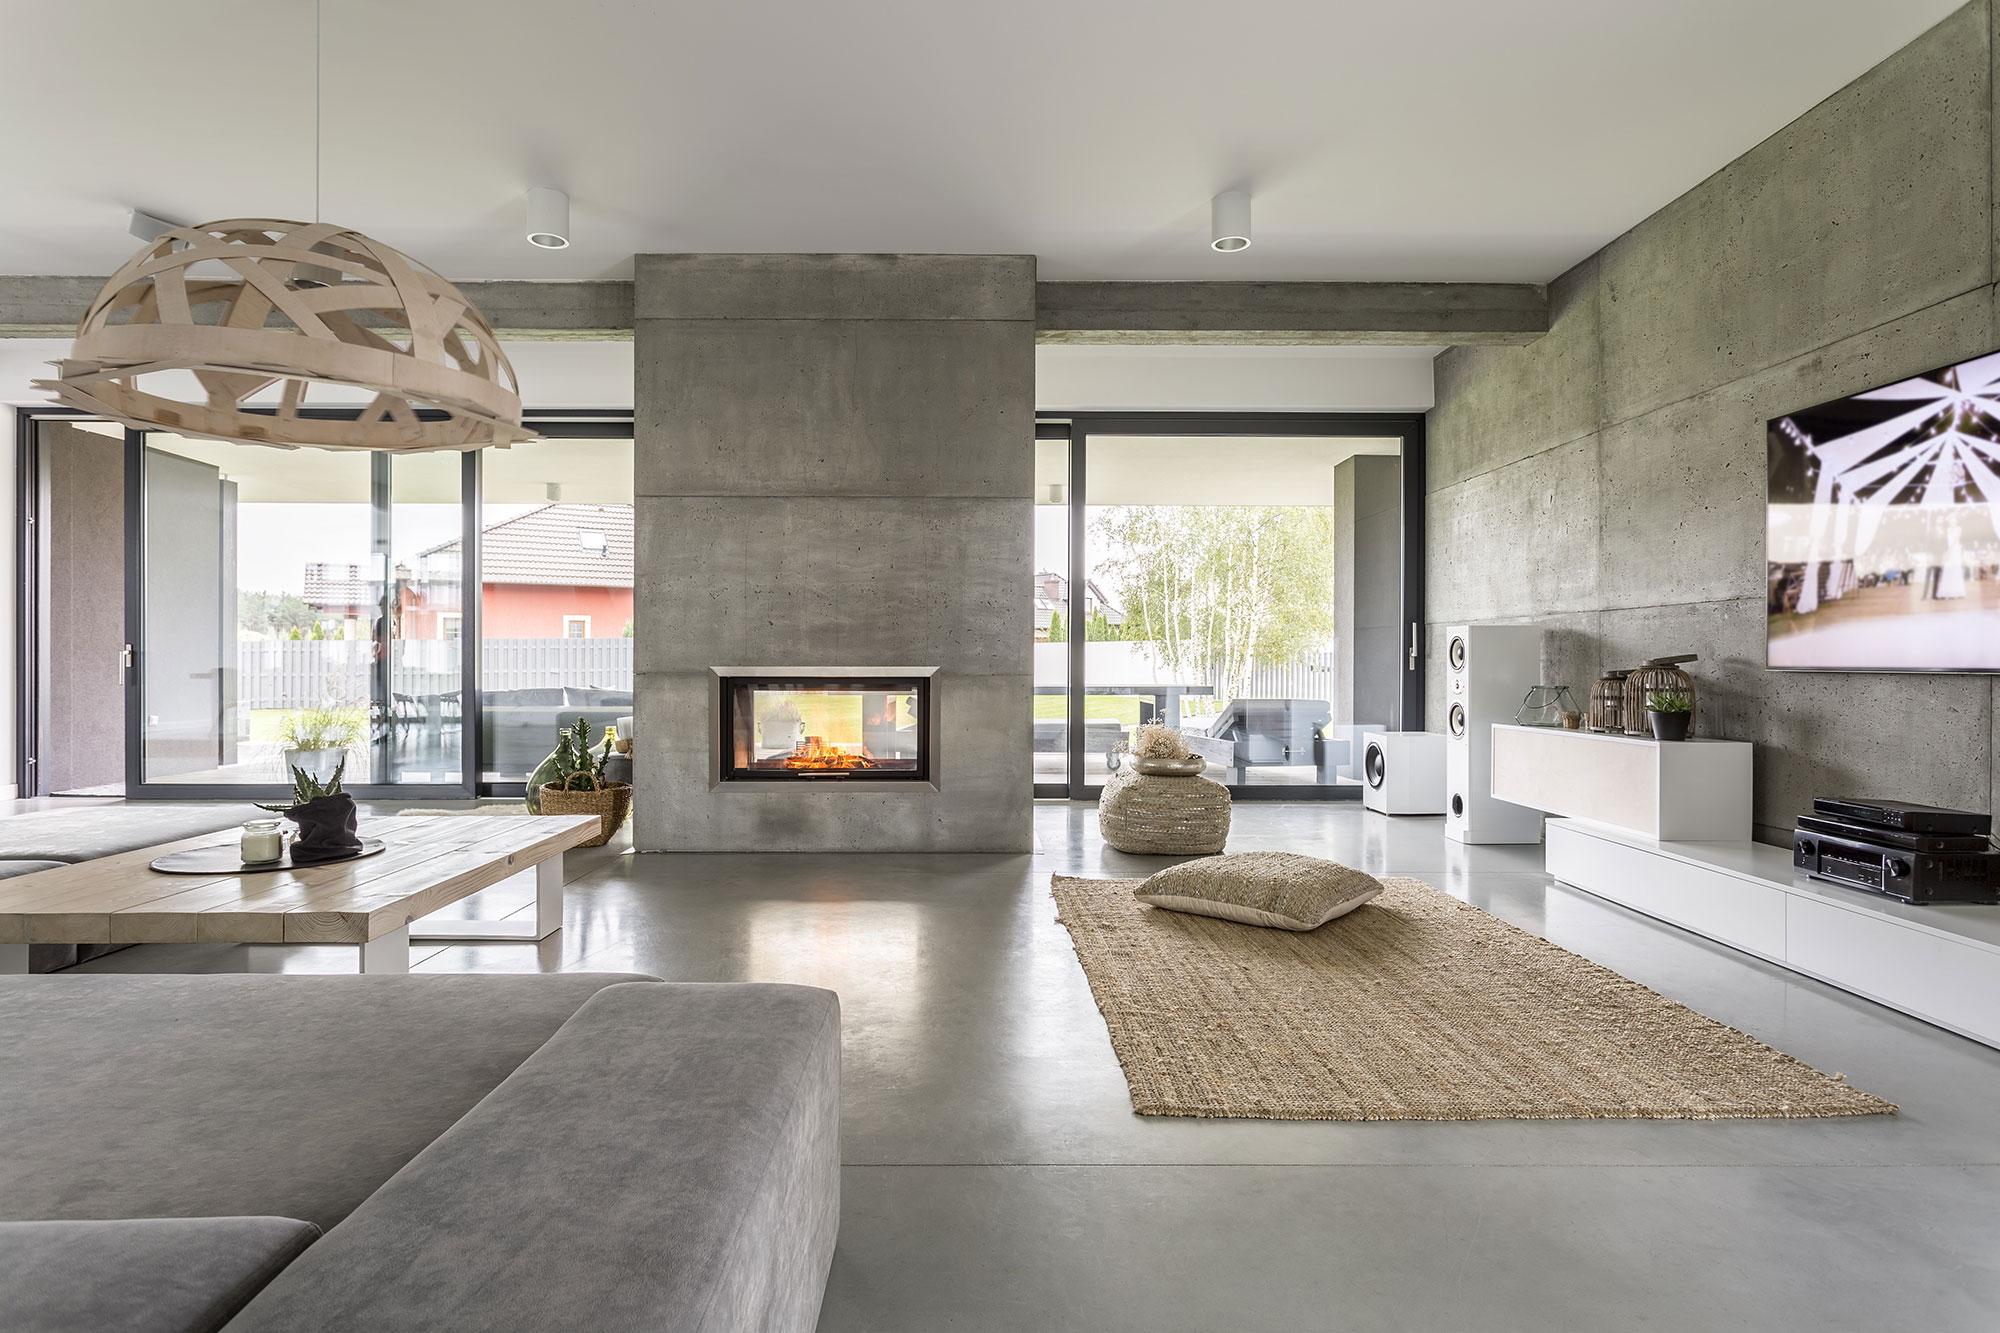 modern luxury living room furniture